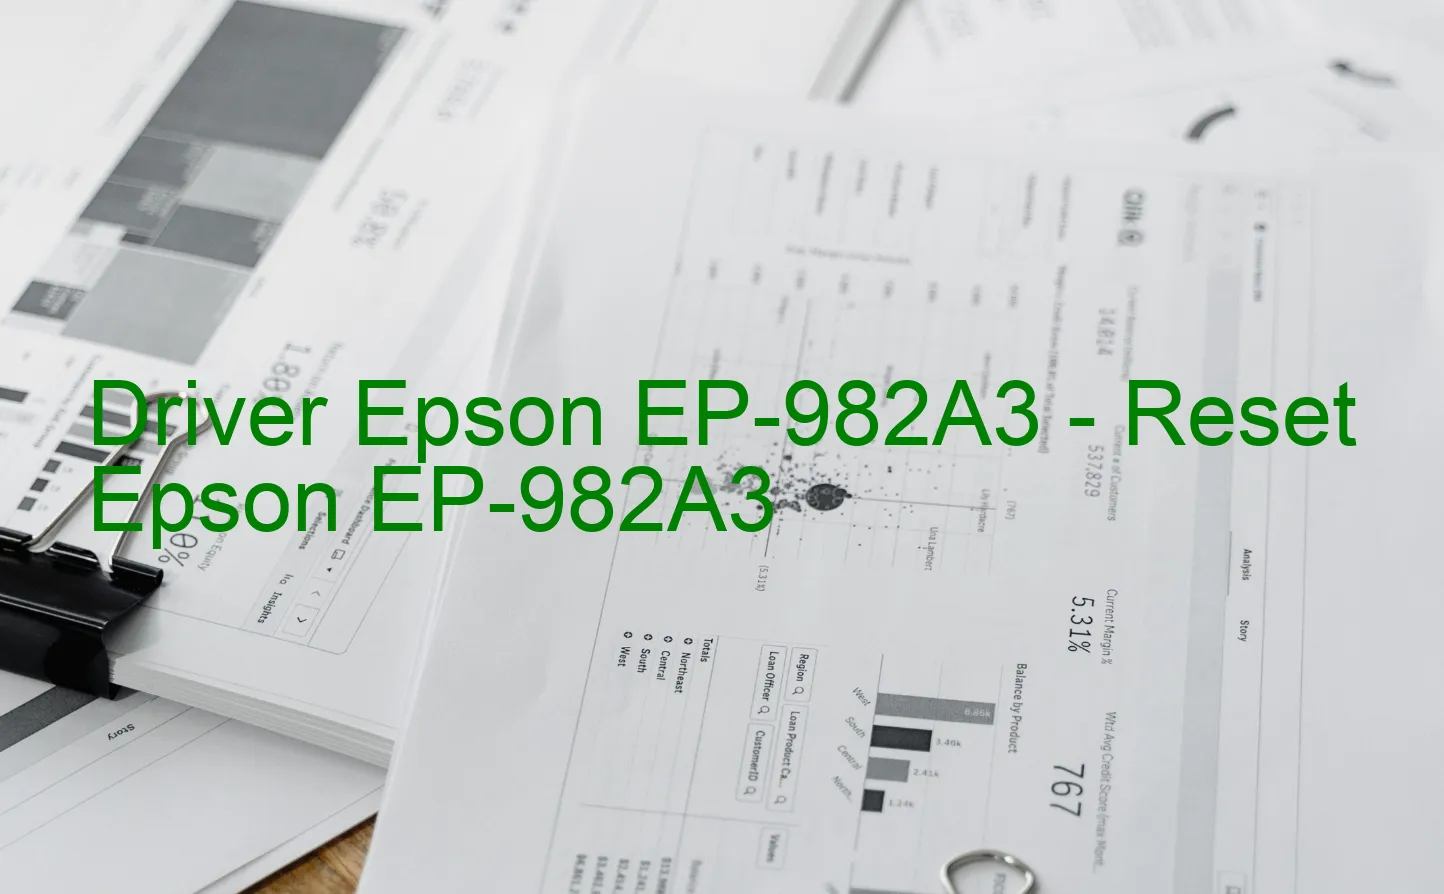 Epson EP-982A3のドライバー、Epson EP-982A3のリセットソフトウェア